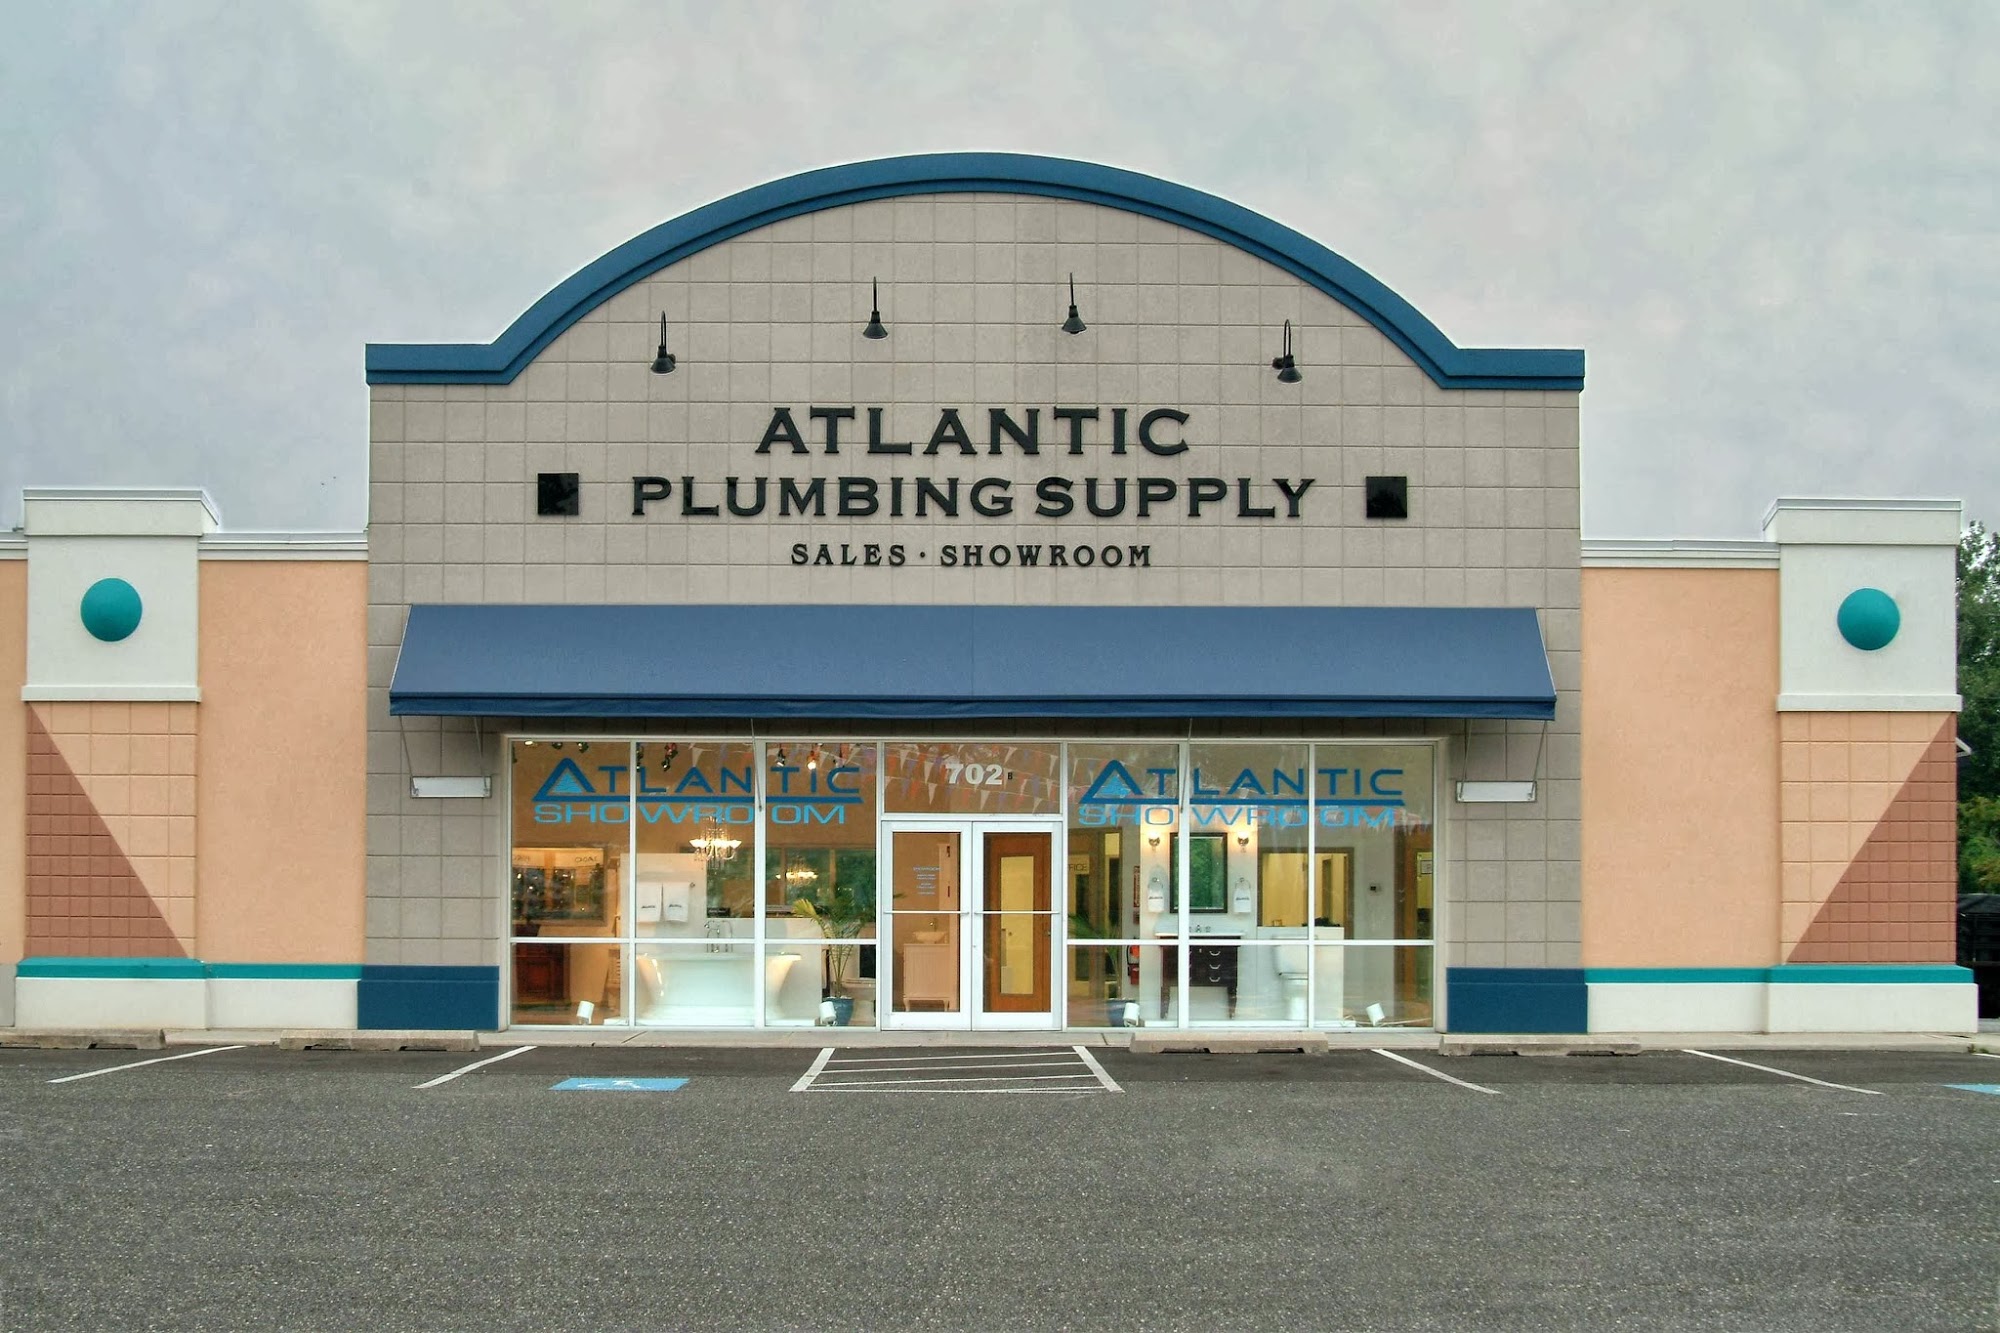 Atlantic Plumbing Supply